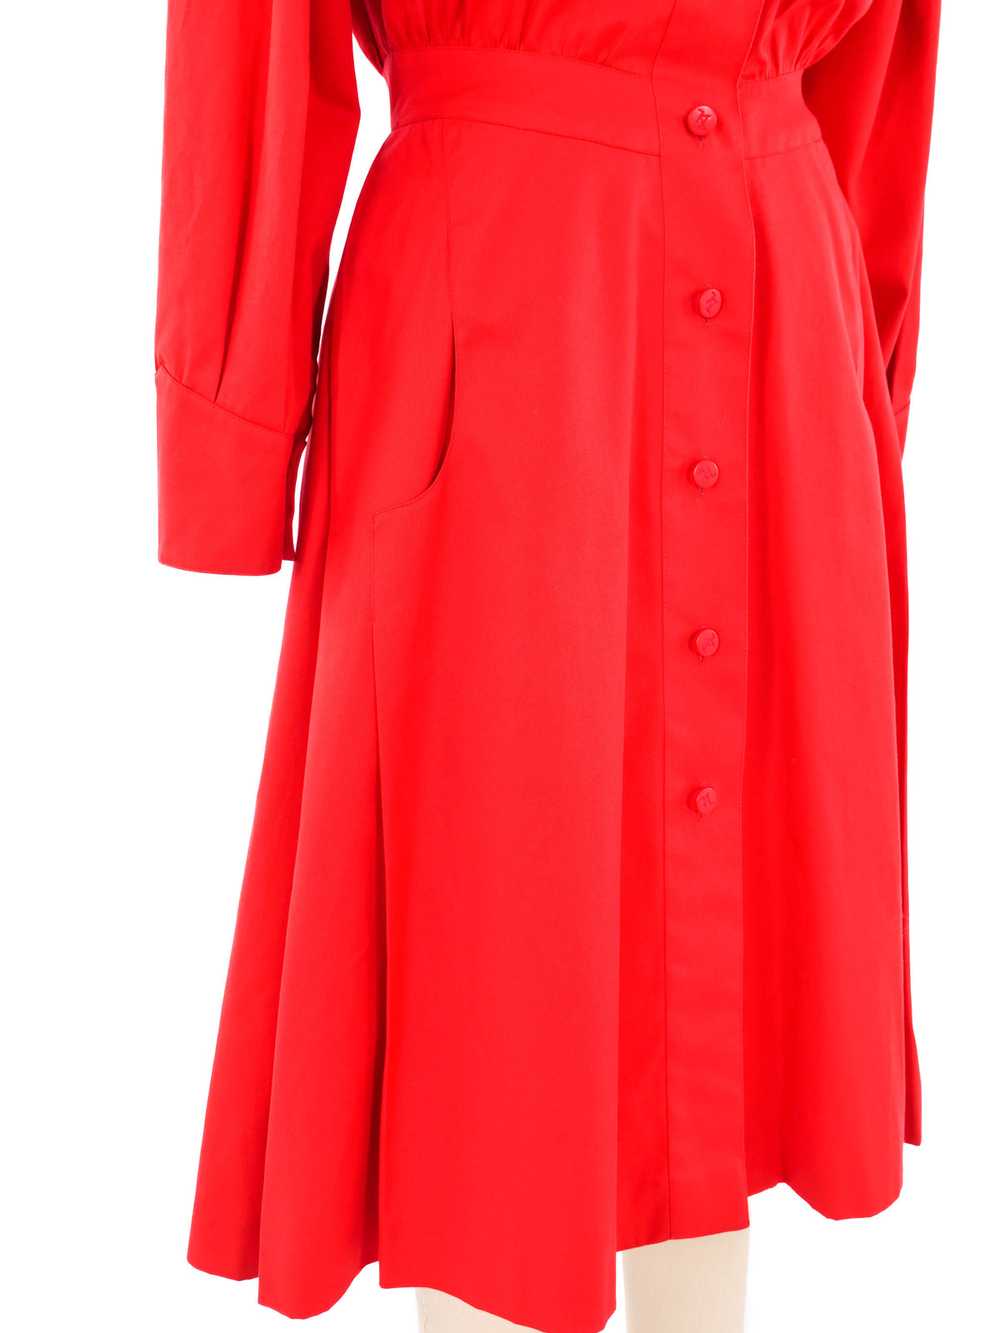 Karl Lagerfeld Red Shirt Dress - image 8